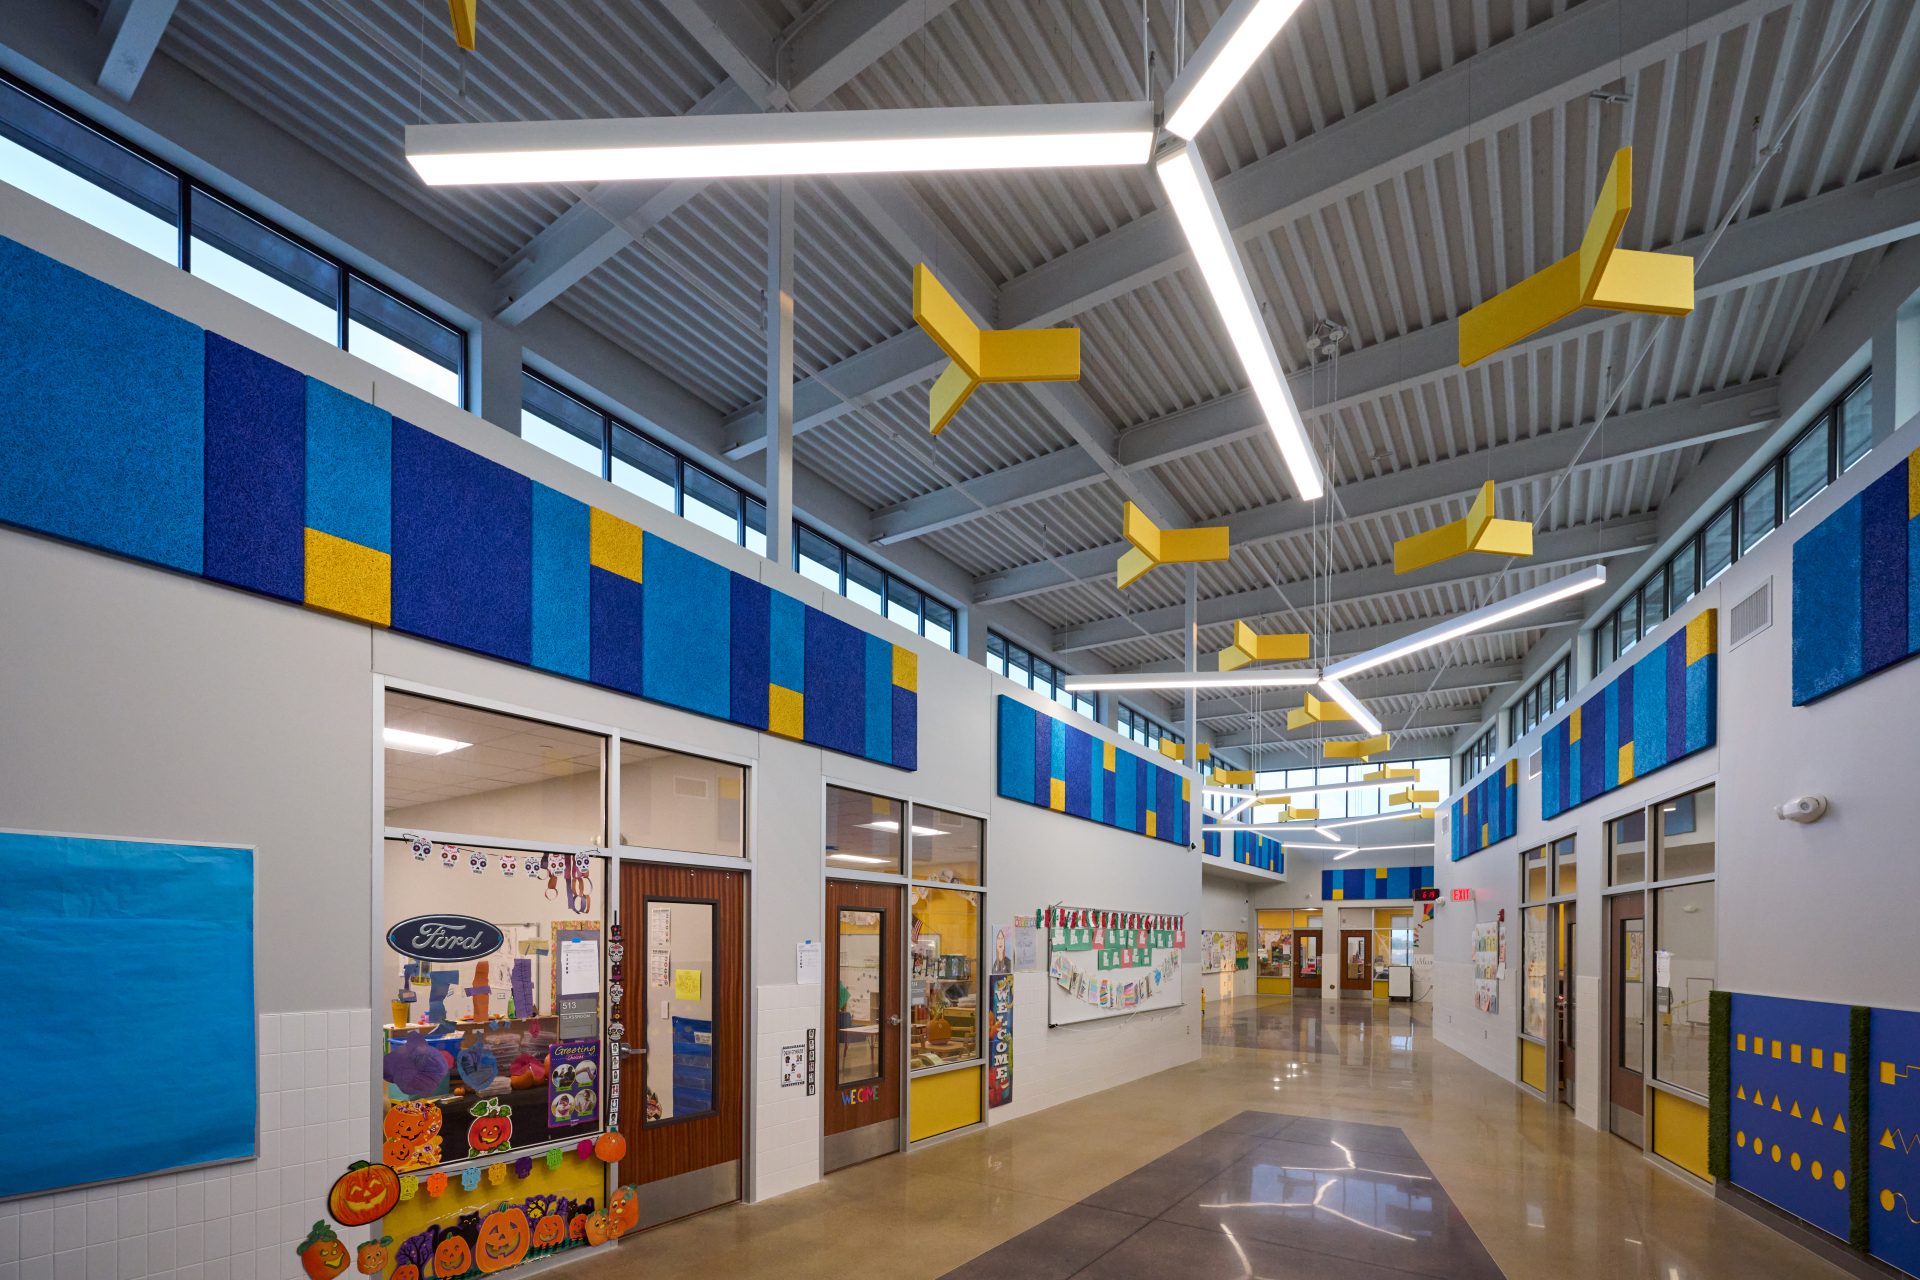 Smith Elementary School Corridor